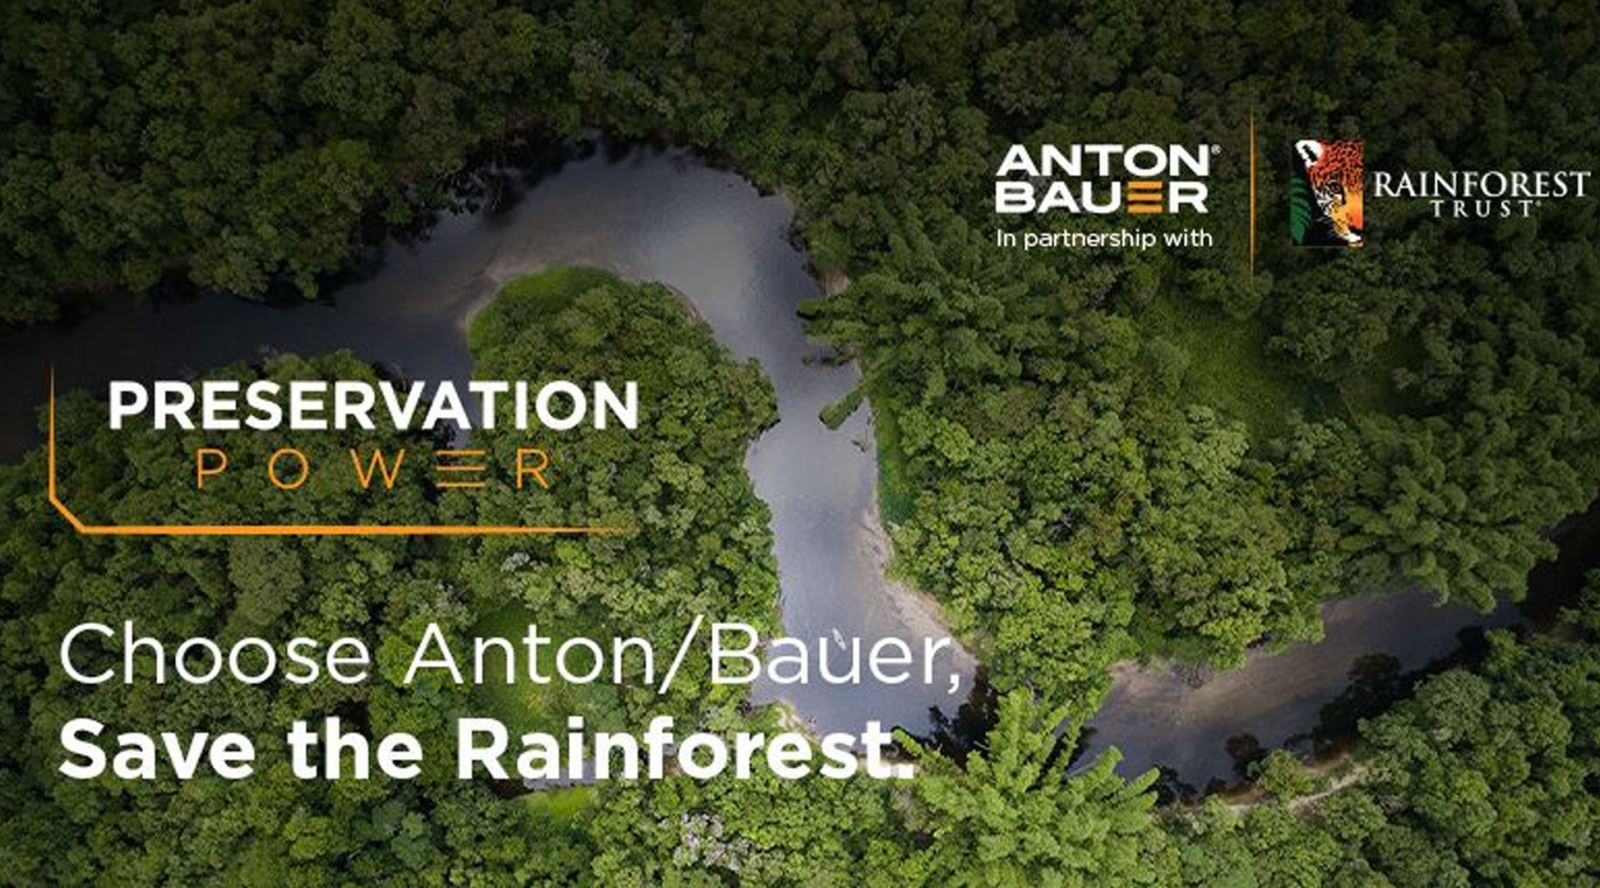 Anton Bauer in partnership with Rainforest Trust